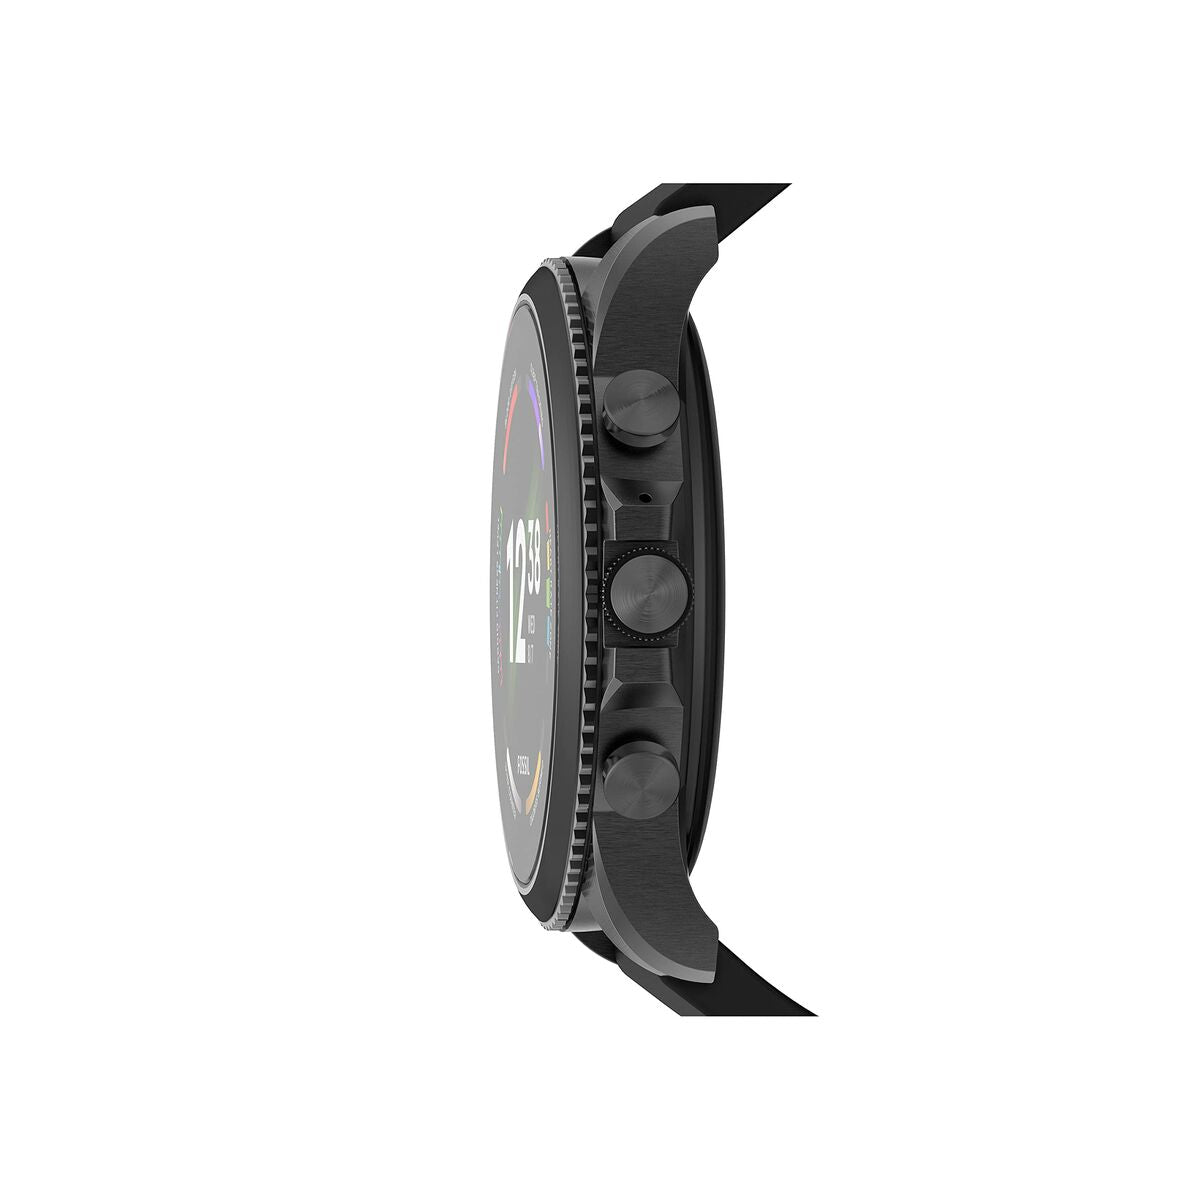 Smartwatch Fossil FTW4061 44 mm 1,28" Schwarz - CA International 